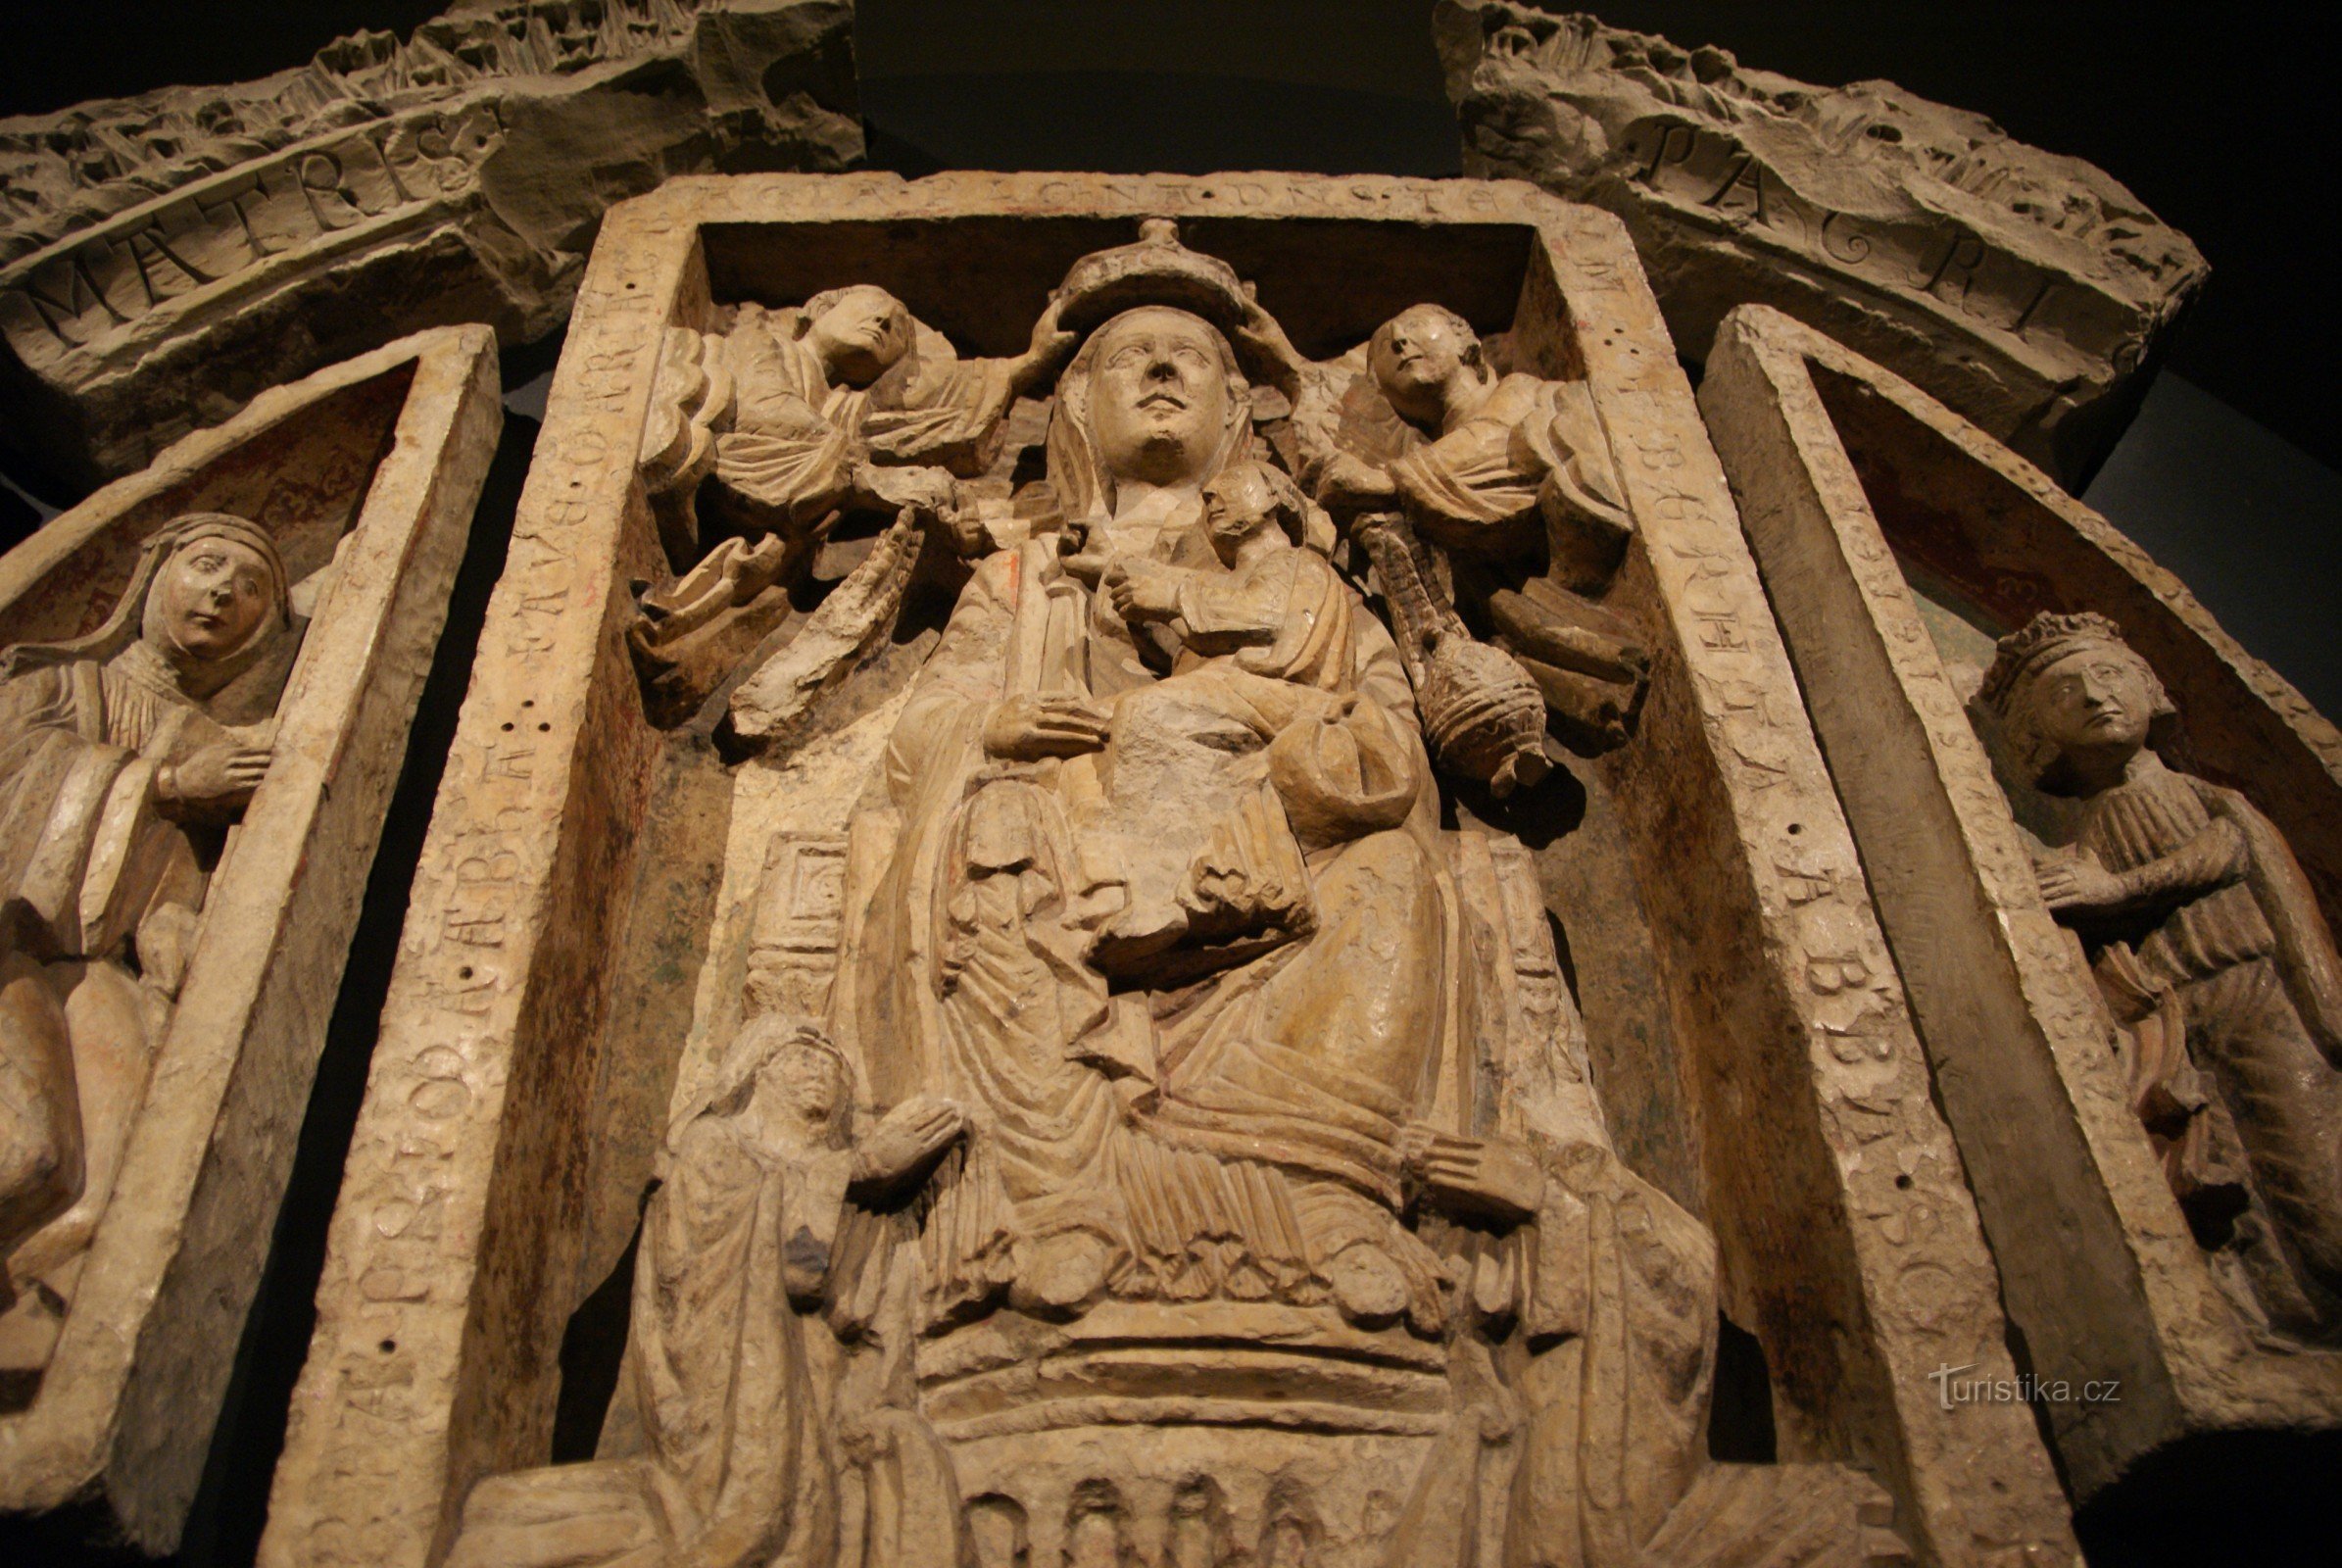 St Georges portal